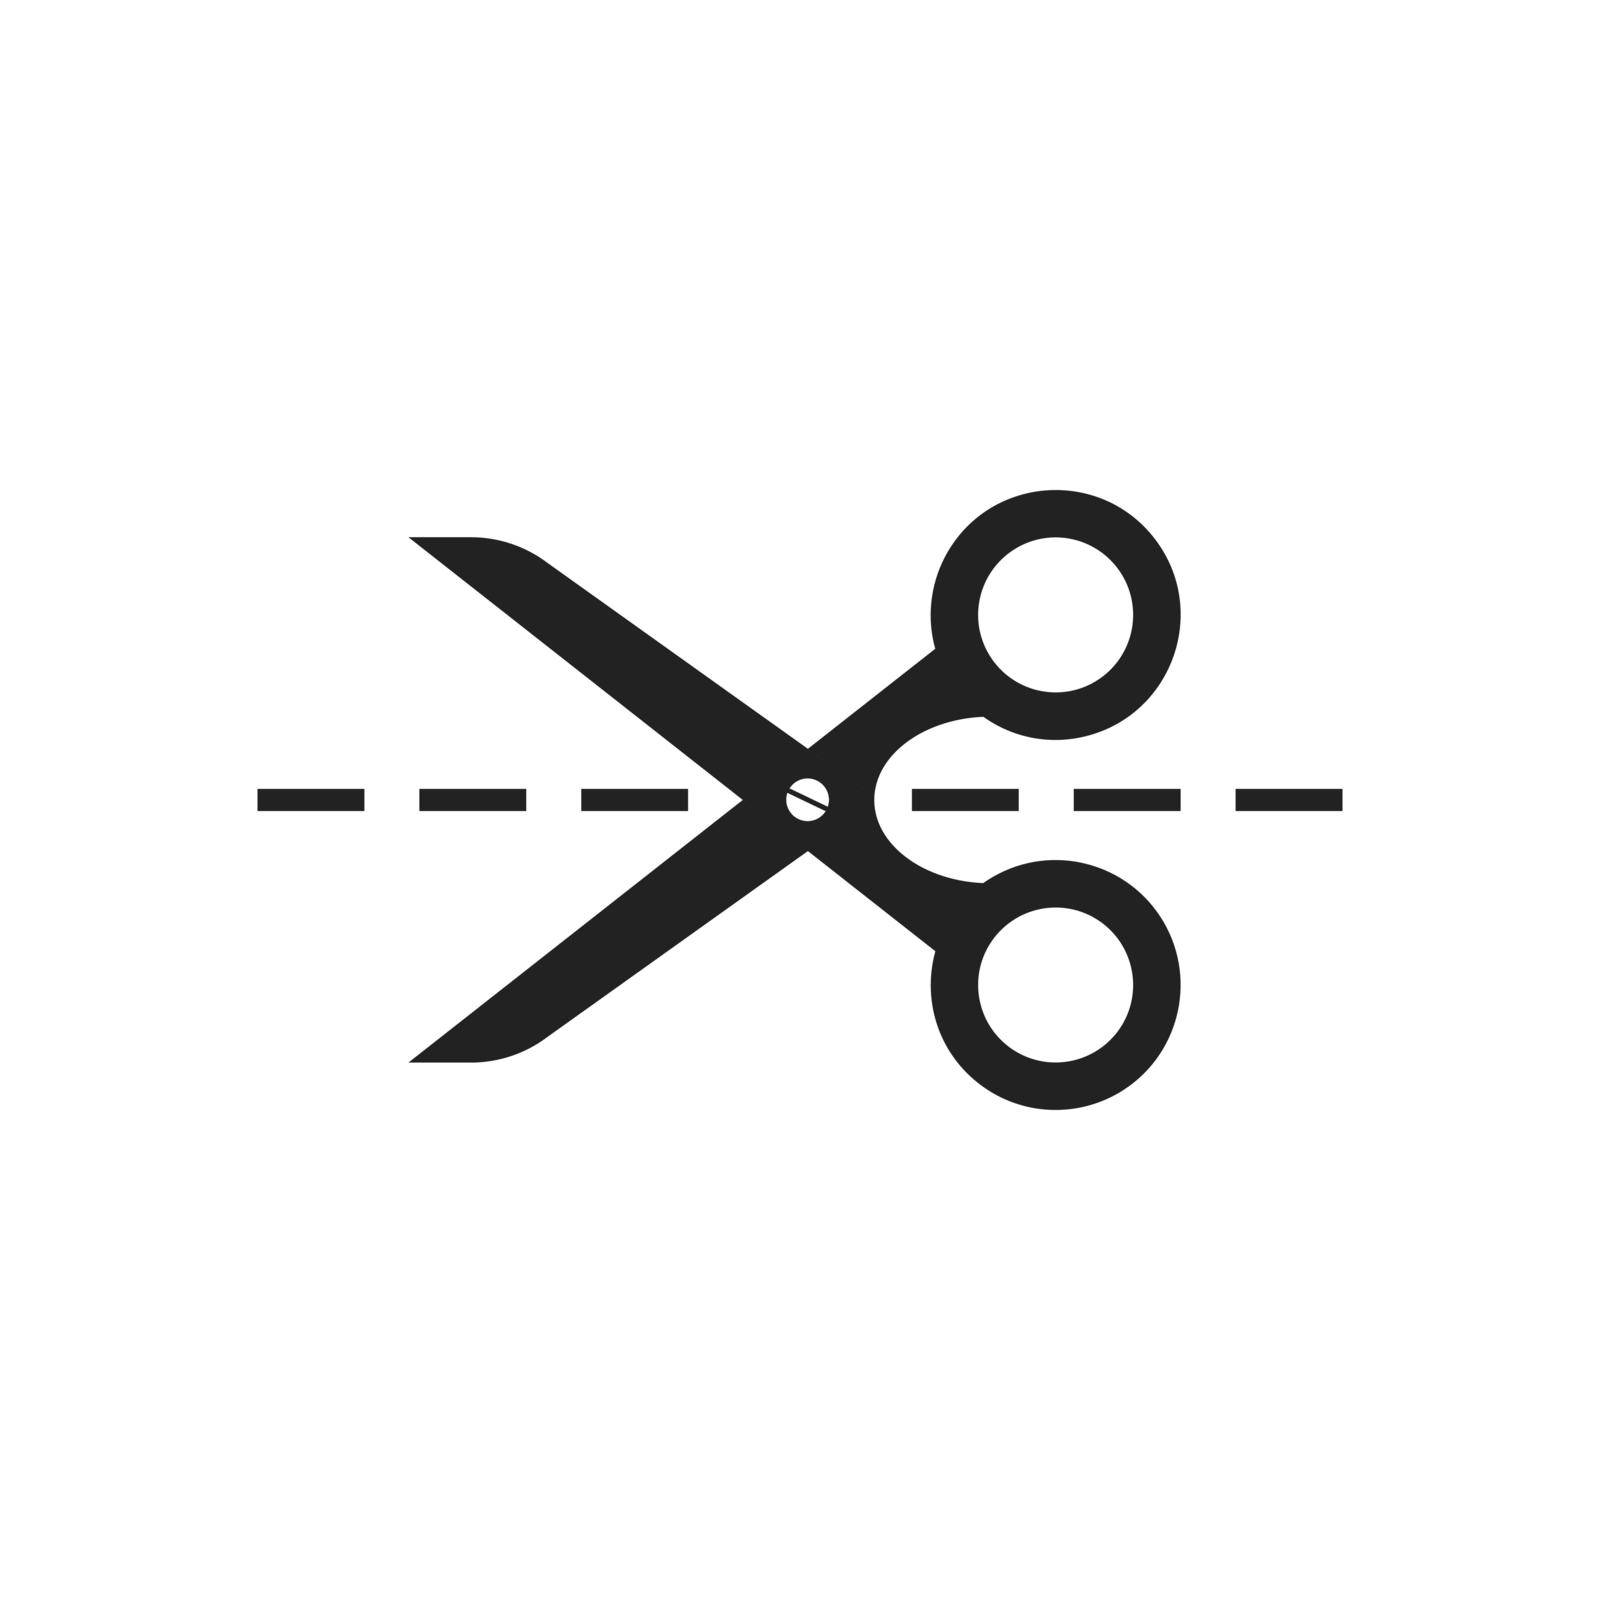 Scissors icon with cut line. Scissor vector illustration. by LysenkoA